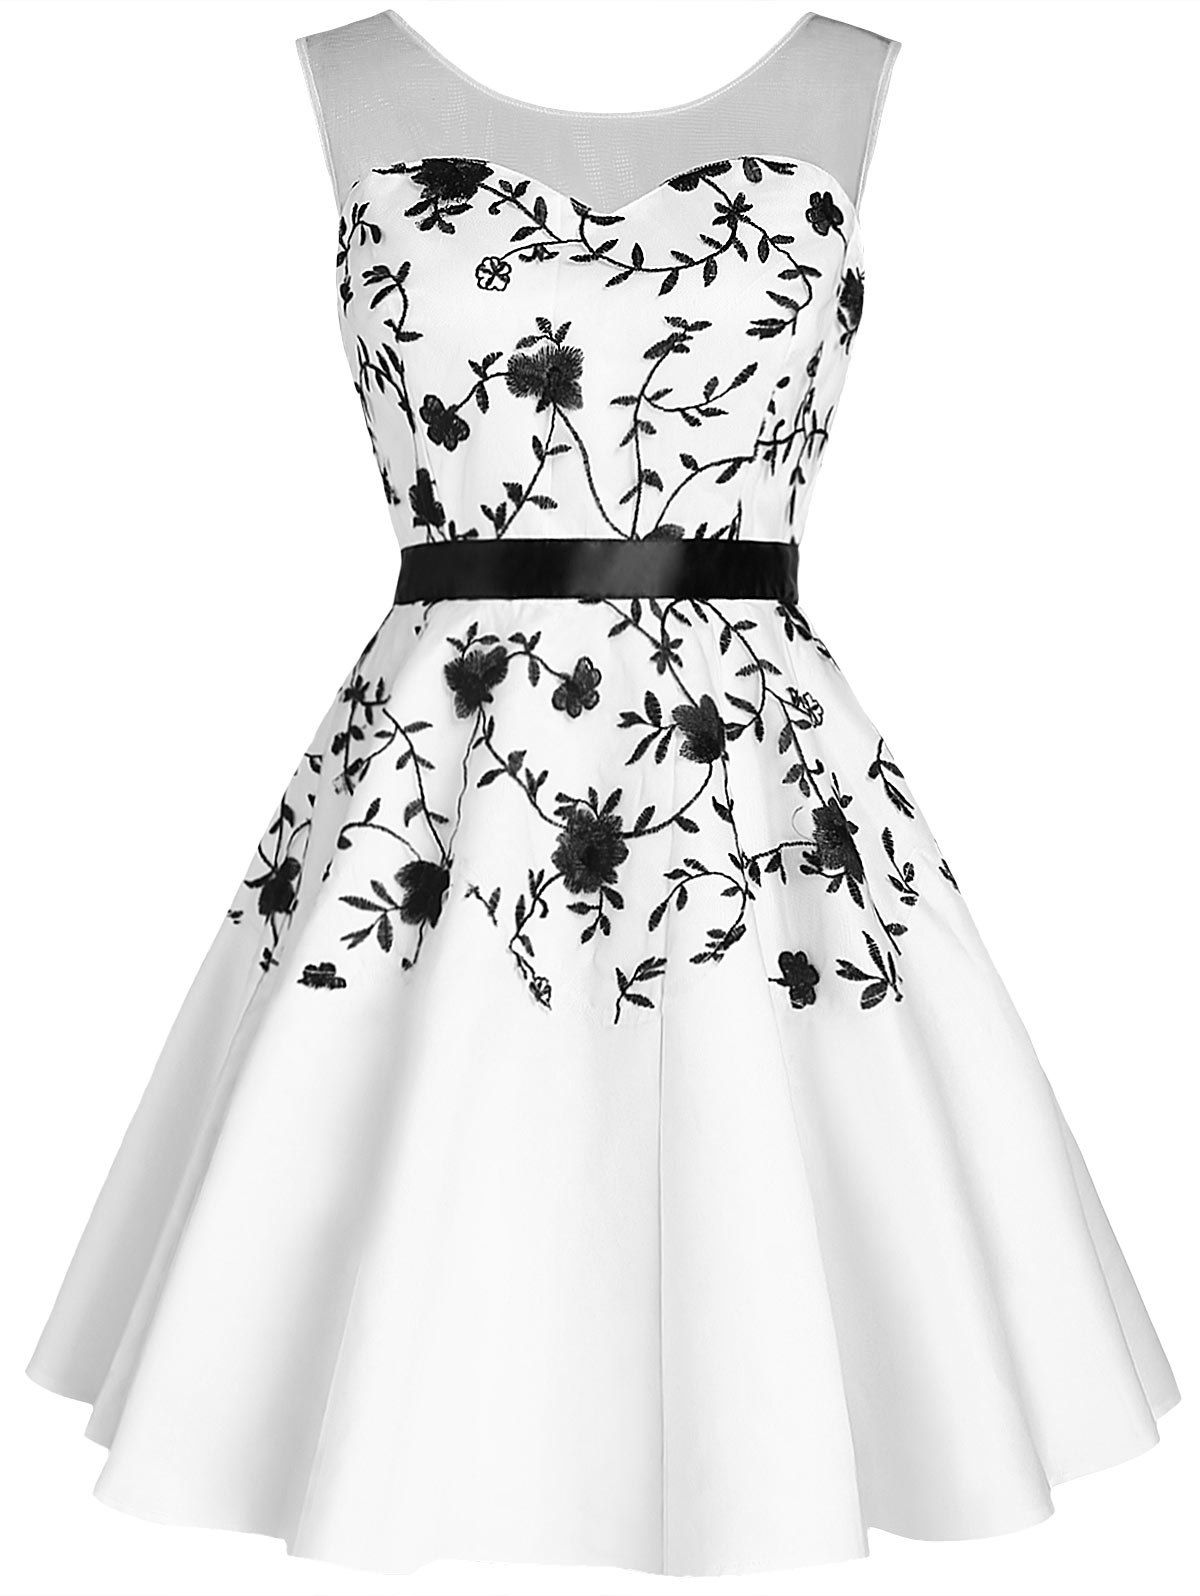 Floral Low V Back Sleeveless Flare Dress - WHITE L